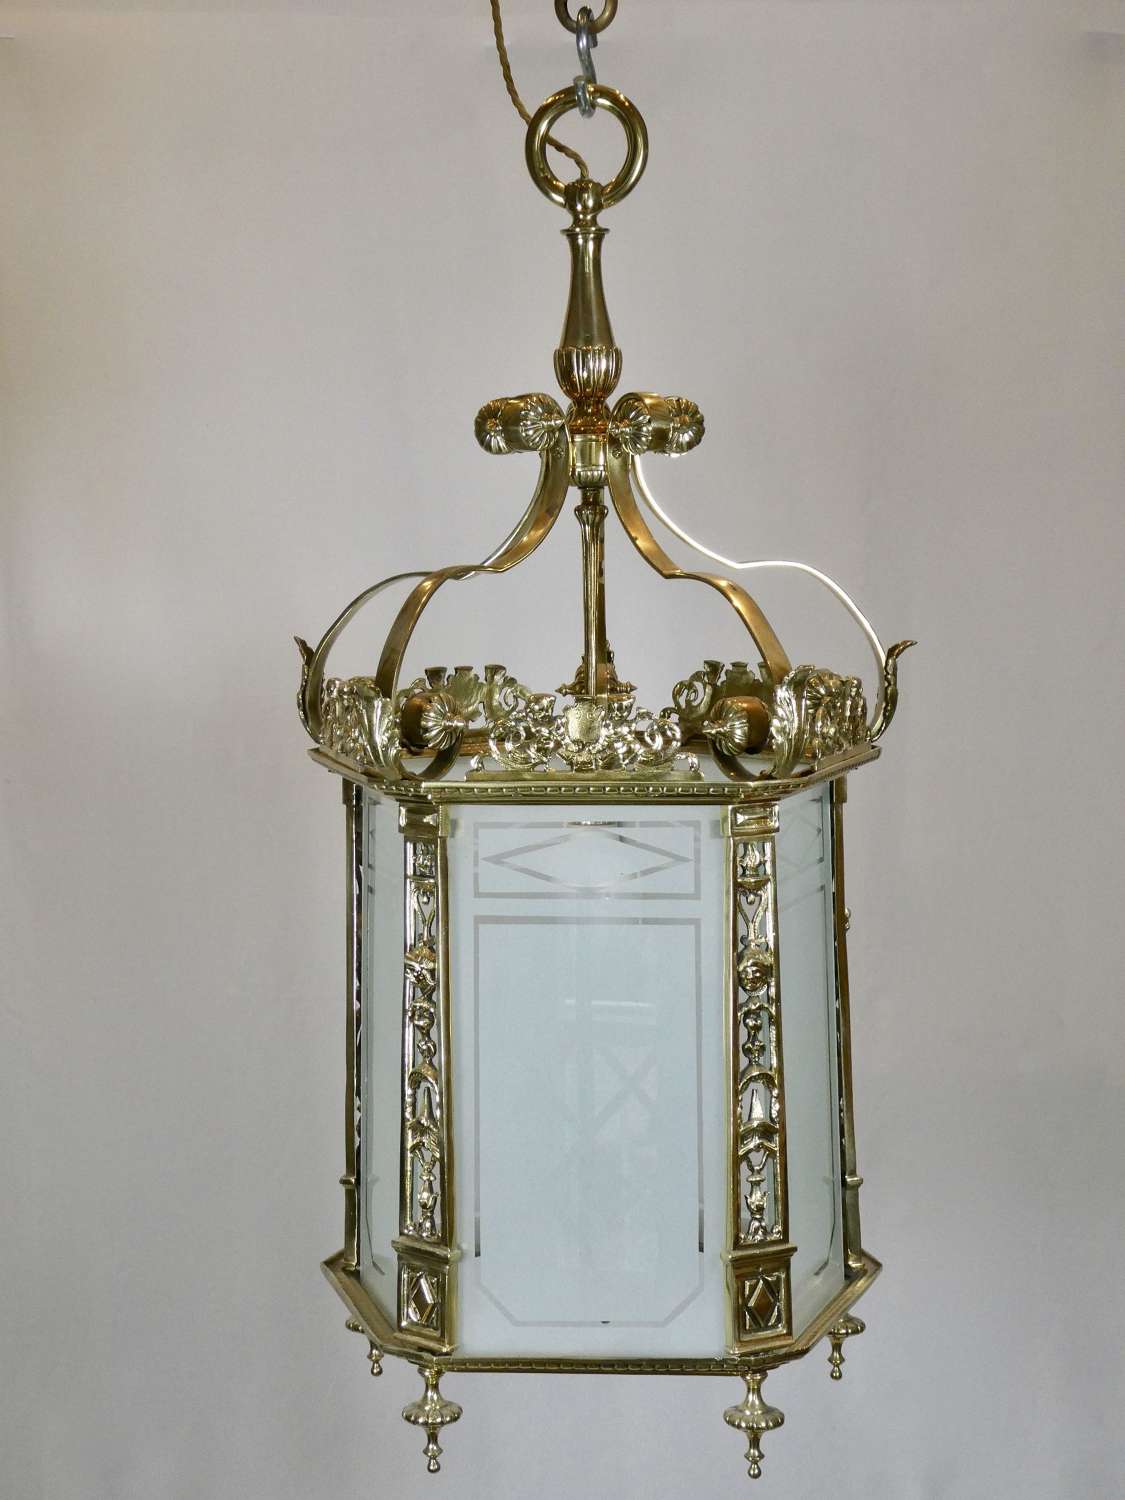 19th century Lantern